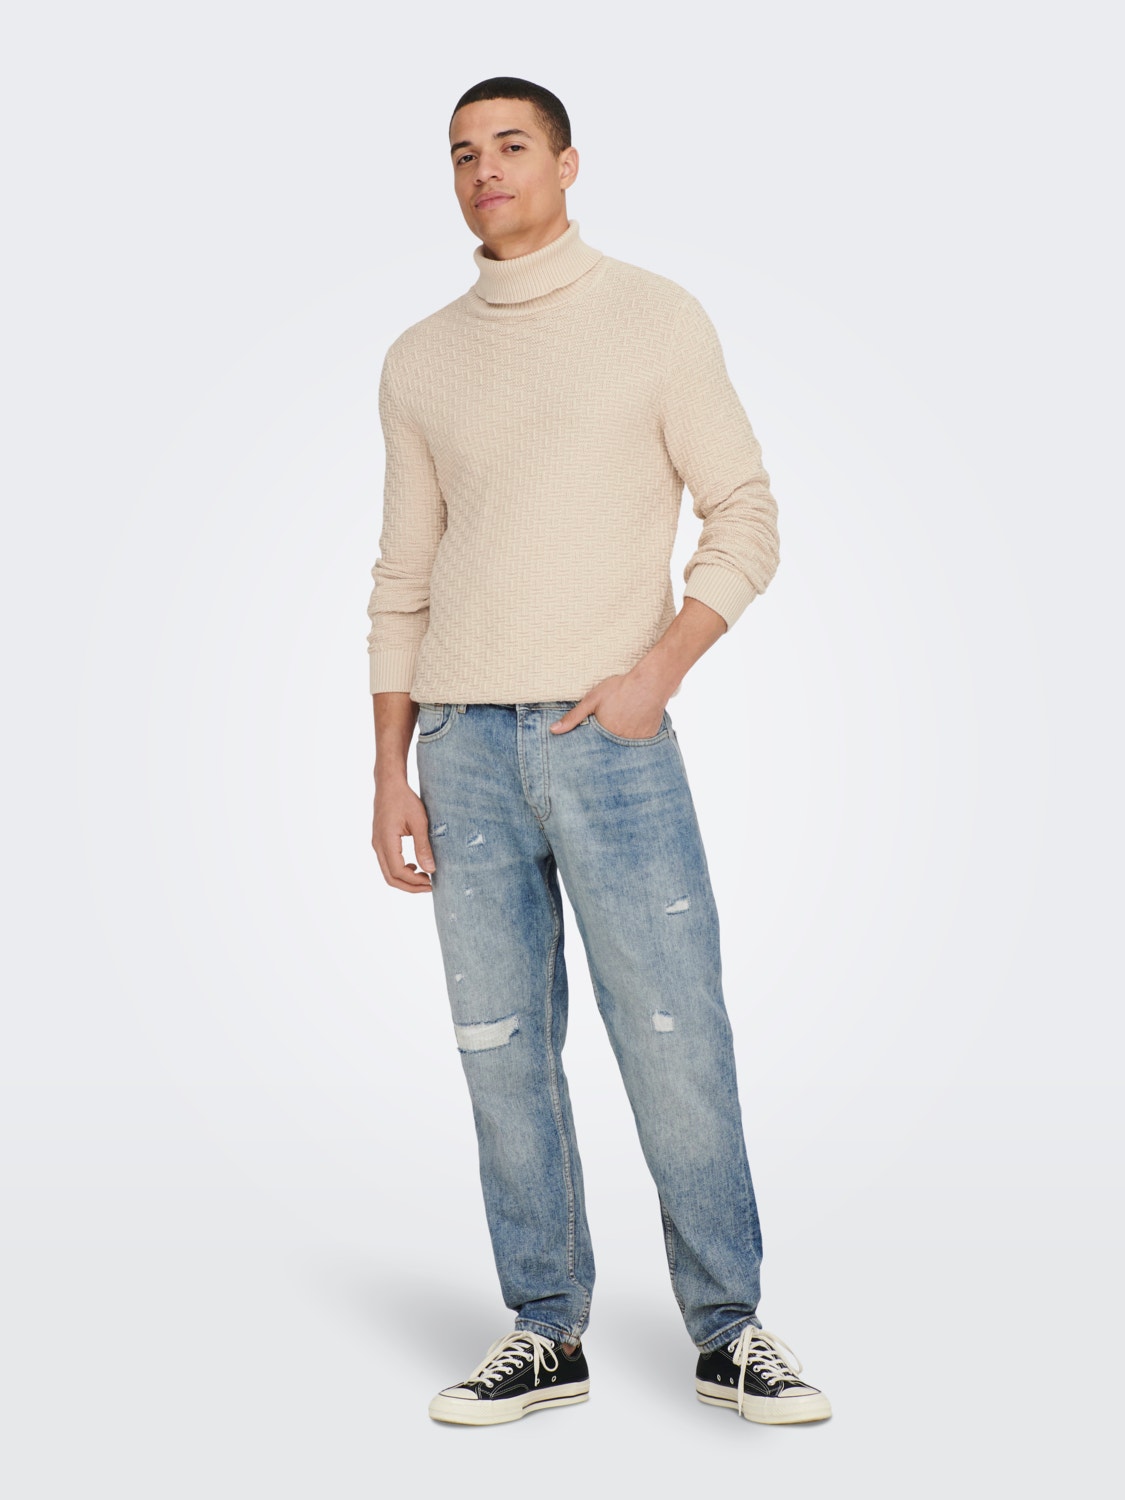 ONLY & SONS Cropped fit Mid waist Versleten zoom Jeans -Blue Denim - 22023149